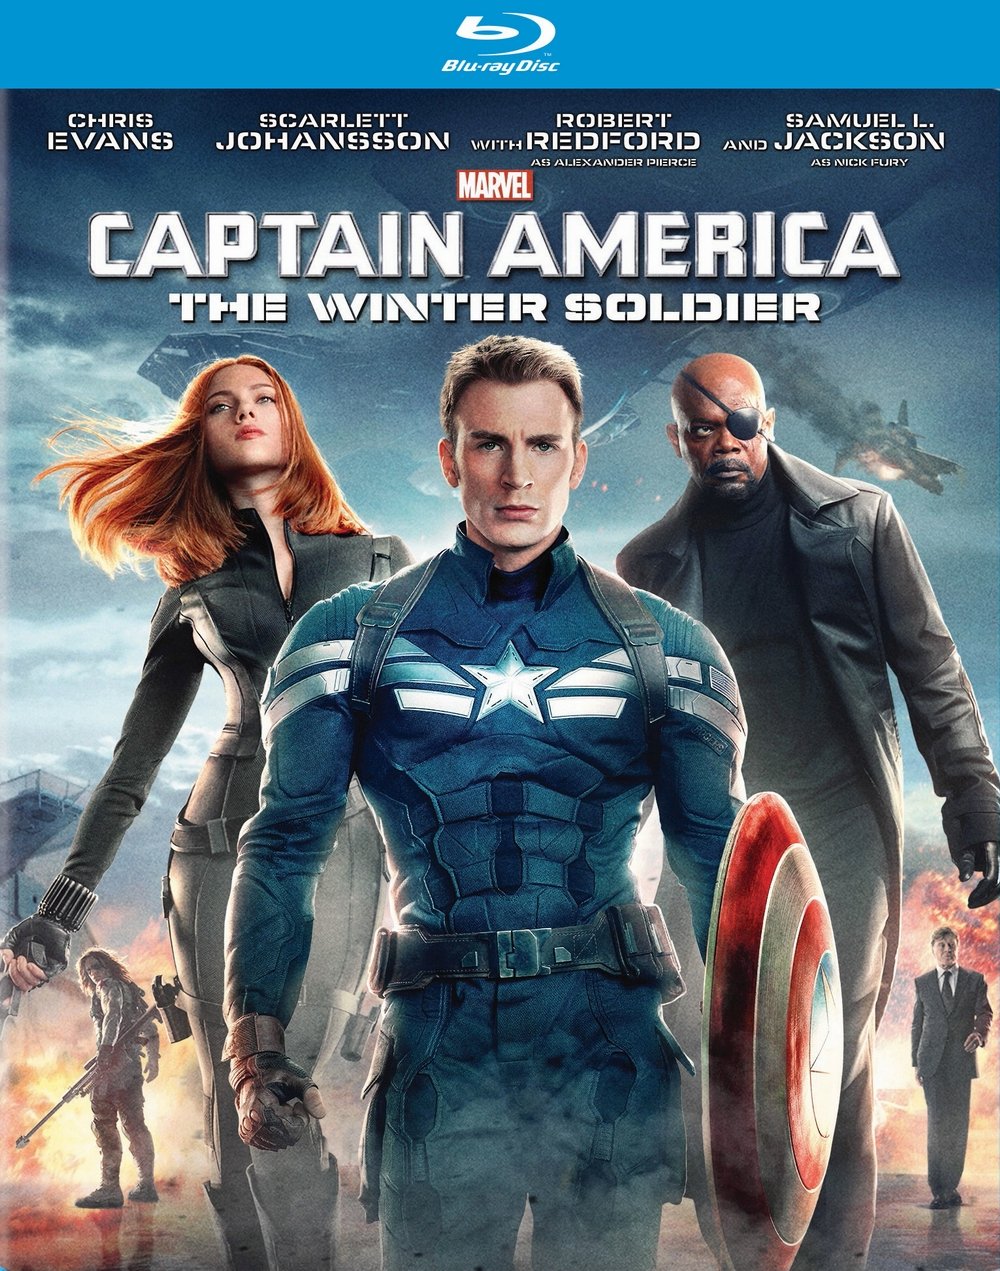 [美国队长2].Captain.America.The.Winter.Soldier.2014.TW.3D.BluRay.1080p.AVC.DTS-HD.MA.7.1-CMCT    41.98G-2.jpg